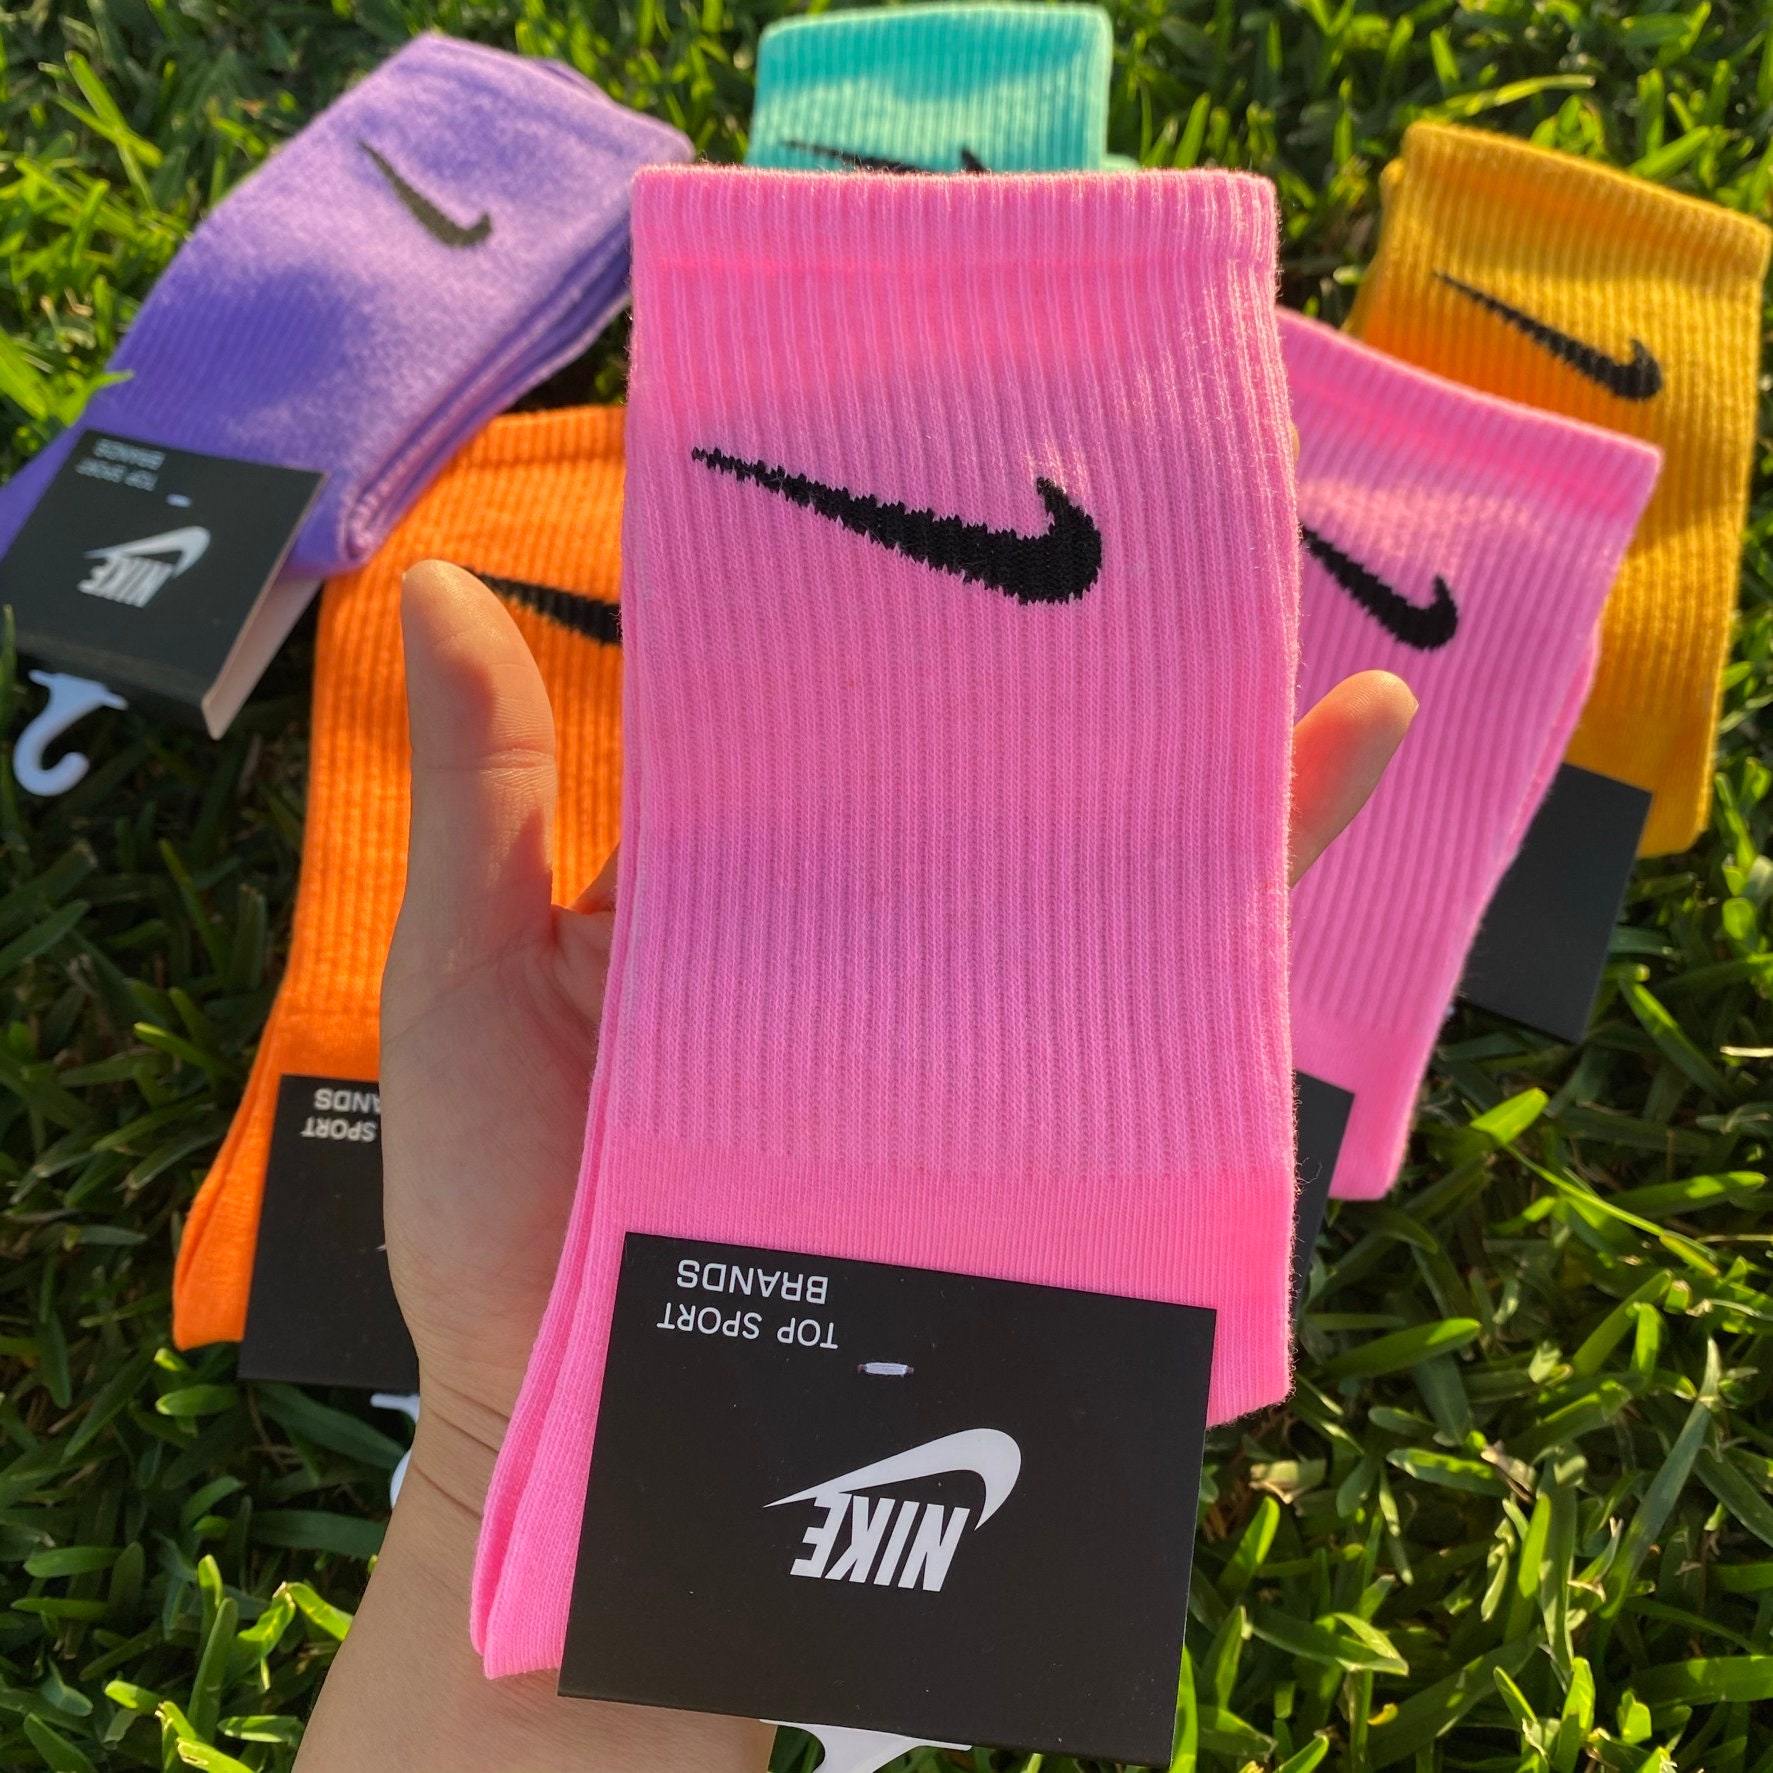 NIKE sock Nike DRI-FIT colorful socks Yellow Nike Sock | Etsy